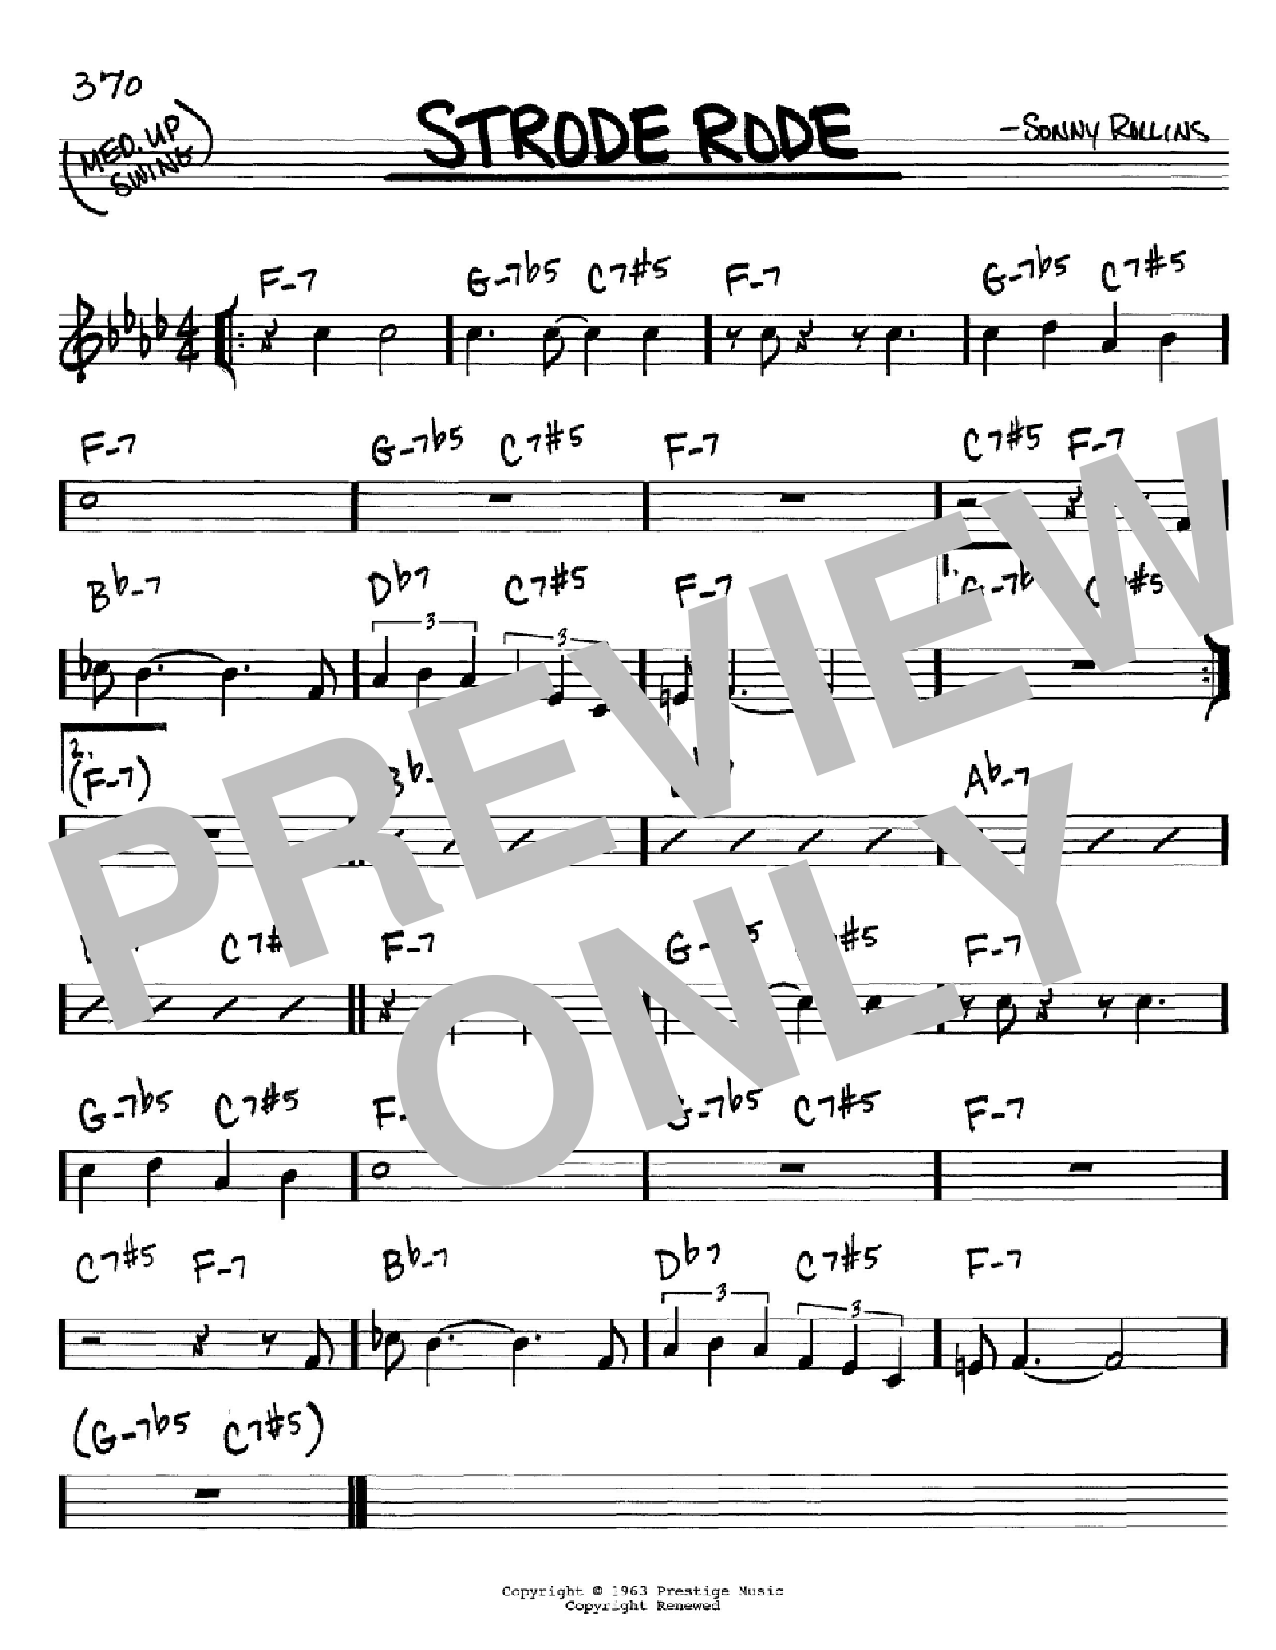 Sonny Rollins Strode Rode Sheet Music Notes & Chords for Tenor Sax Transcription - Download or Print PDF